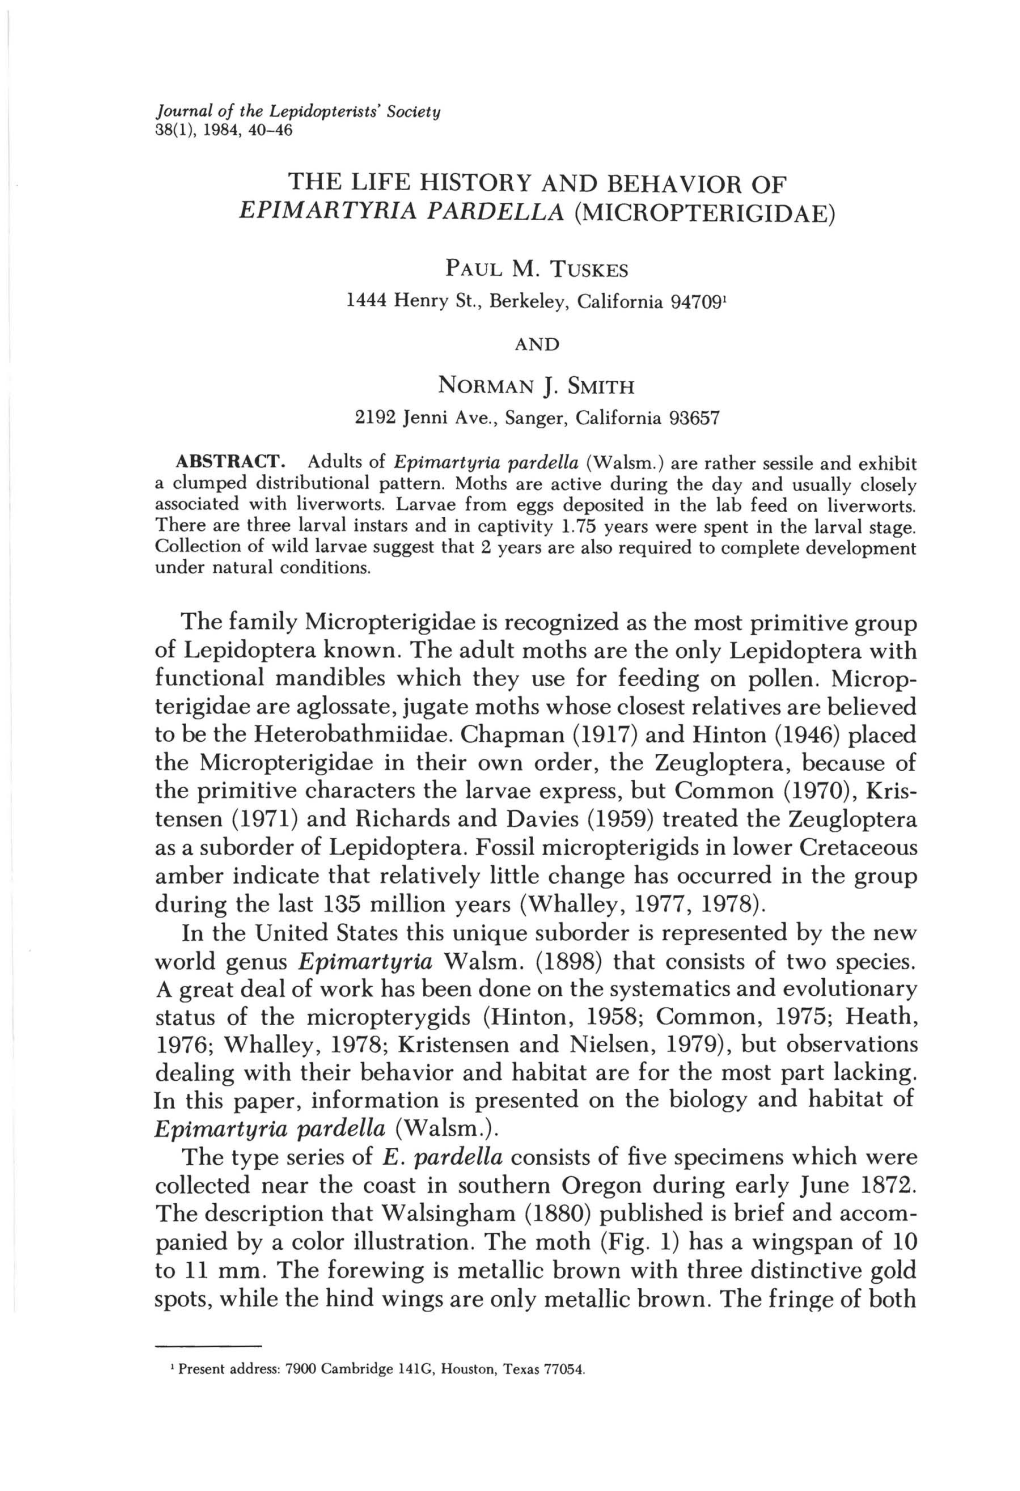 The Life History and Behavior of Epimartyria Pardella (Micropterigidae)